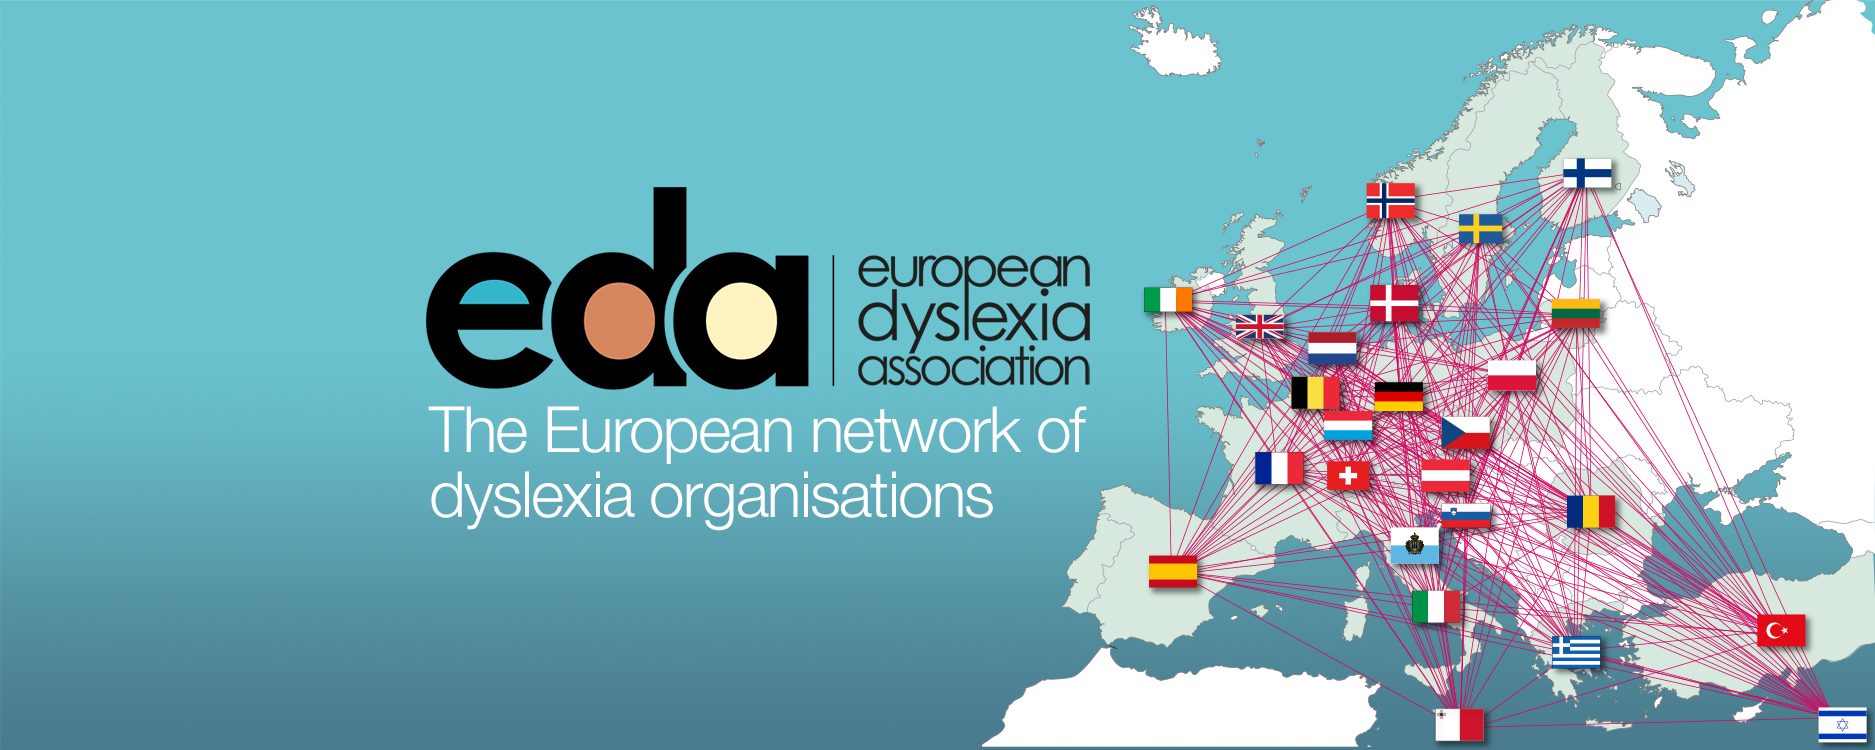 European Dyslexia Association